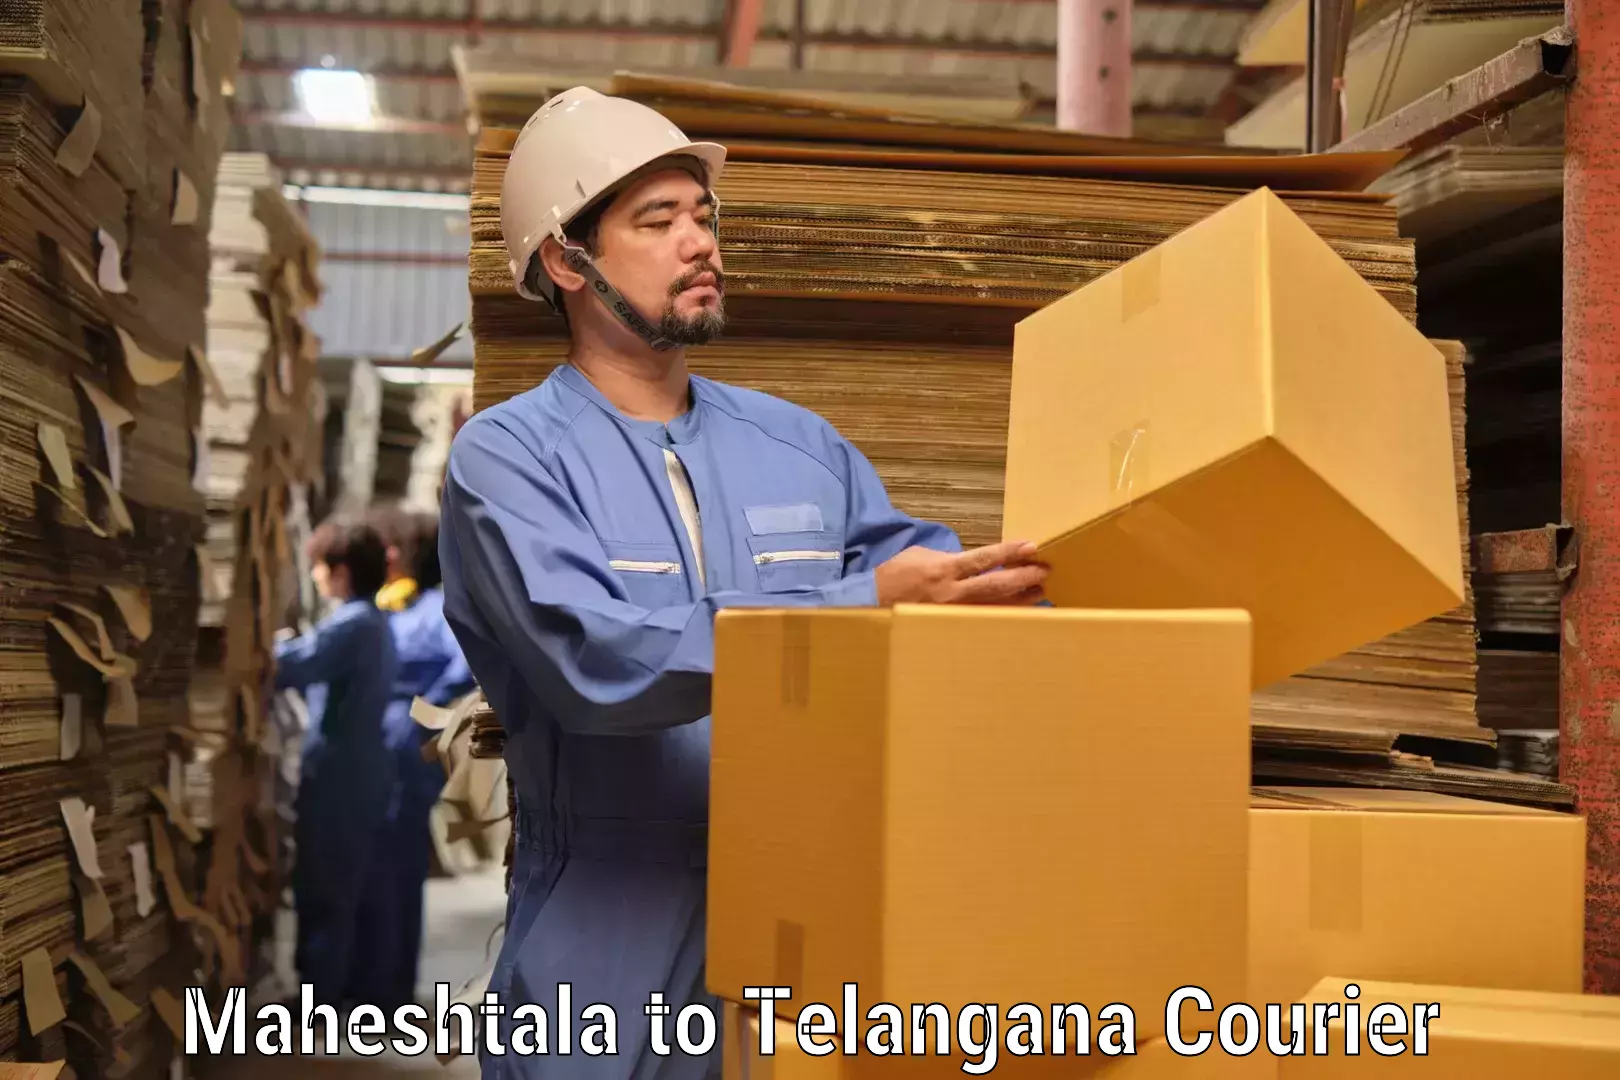 Professional courier handling Maheshtala to Madhira